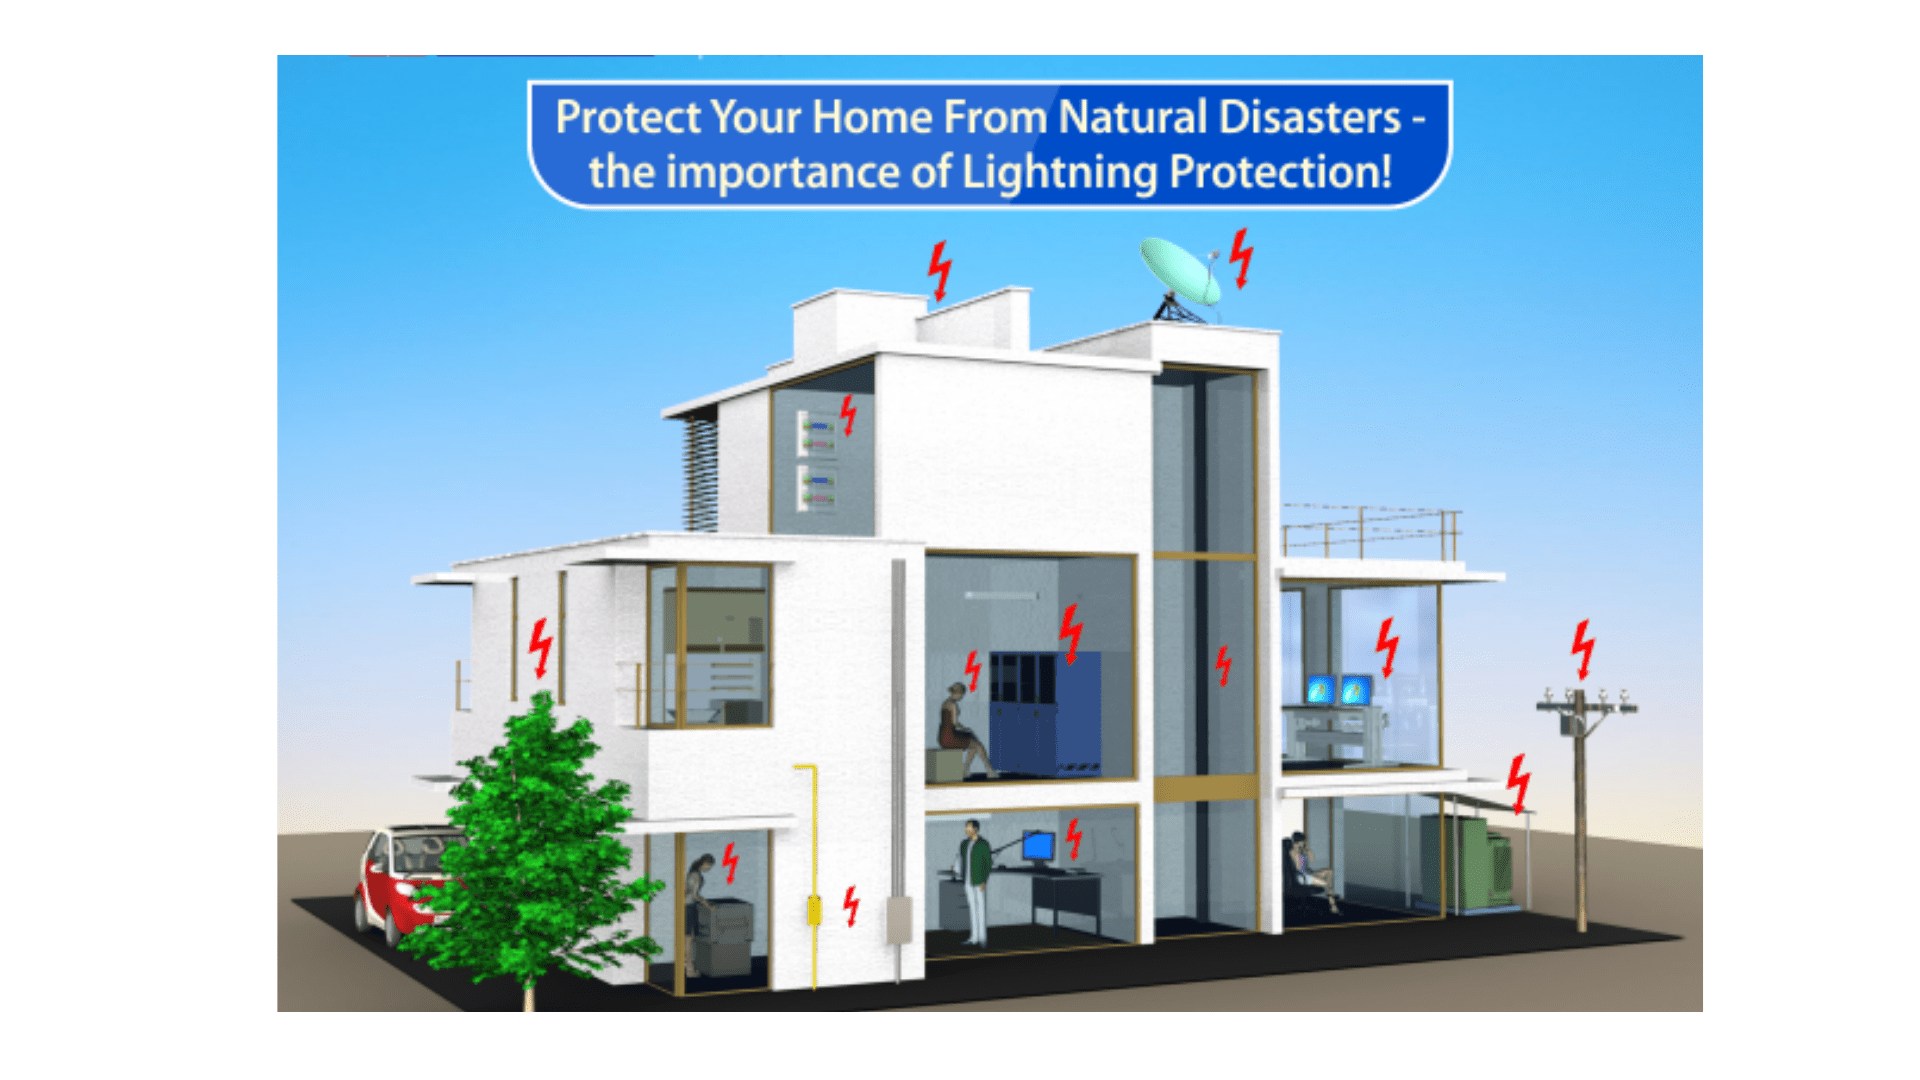 How to install lightning arrester on building?